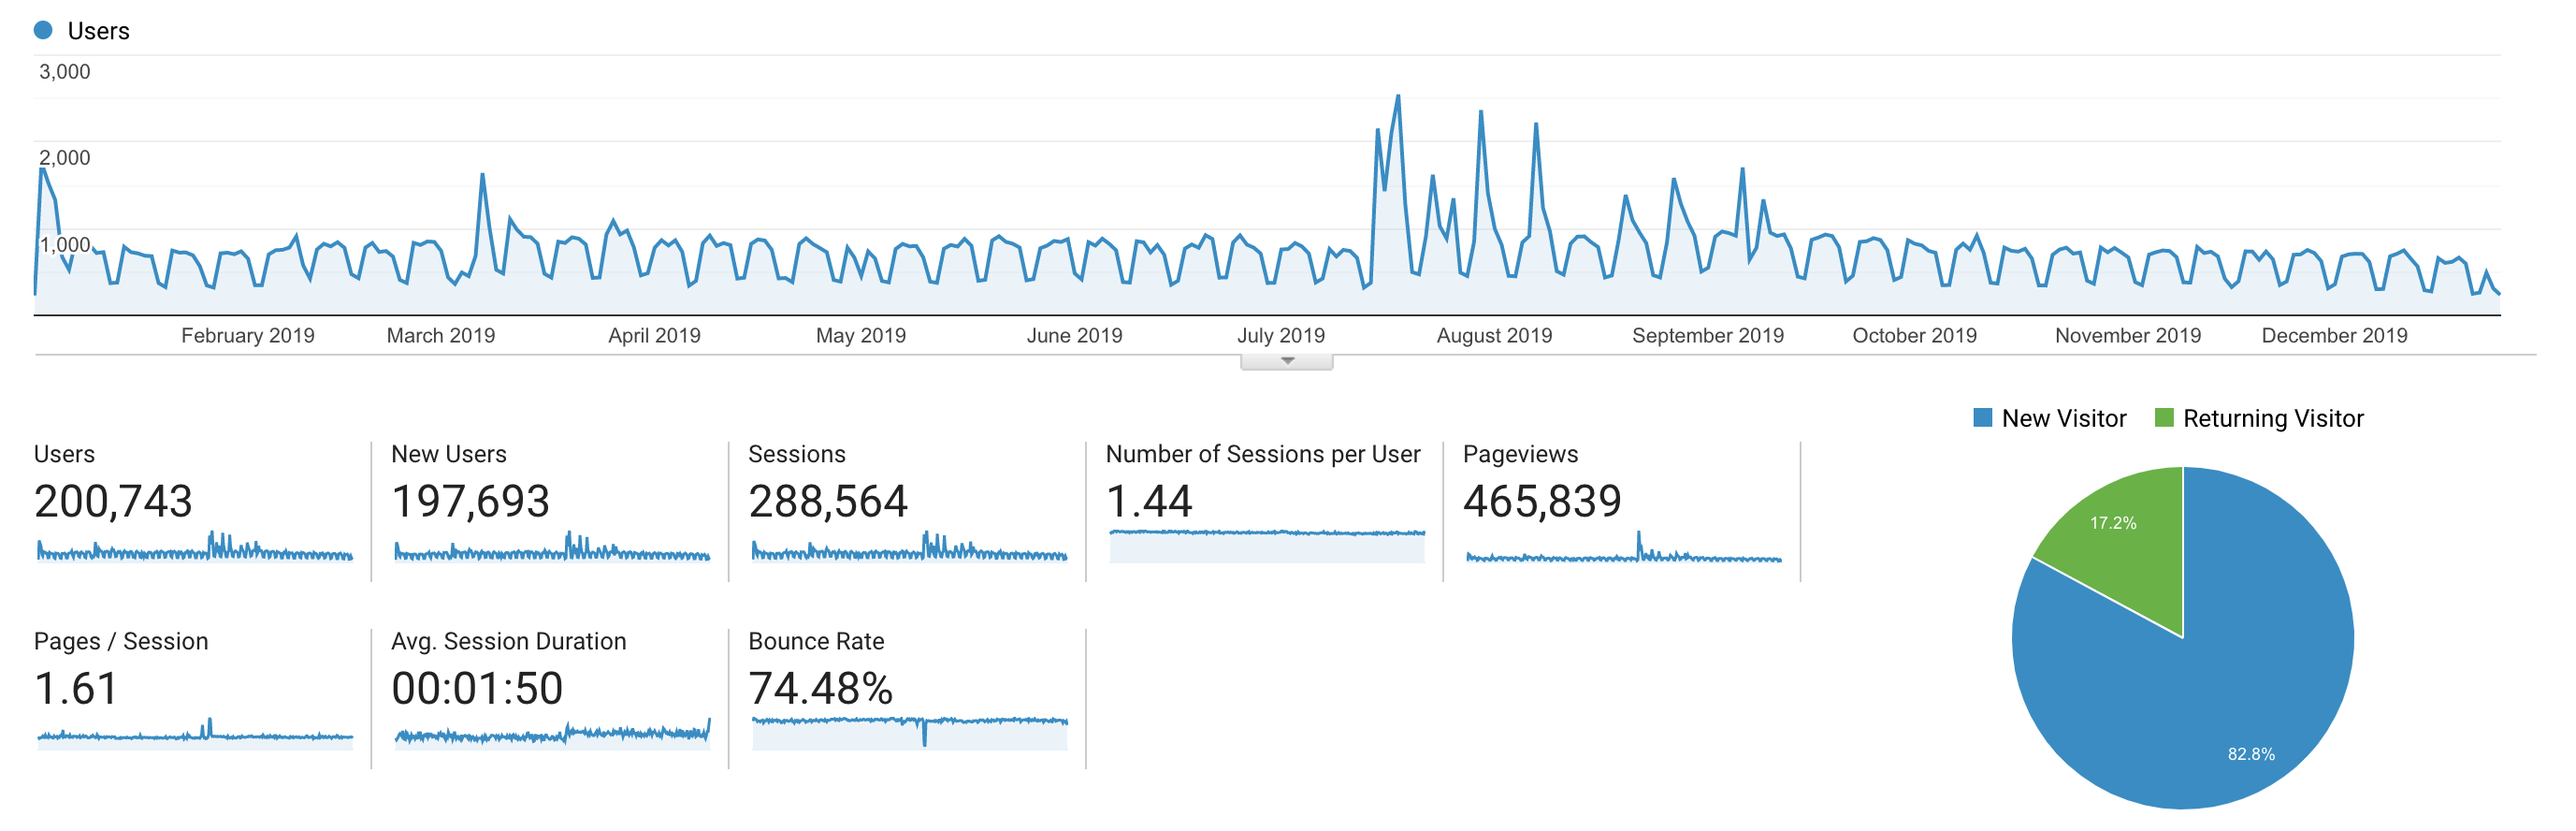 Gráfico do analytics mostrando que tive 200.743 usuarios no ano